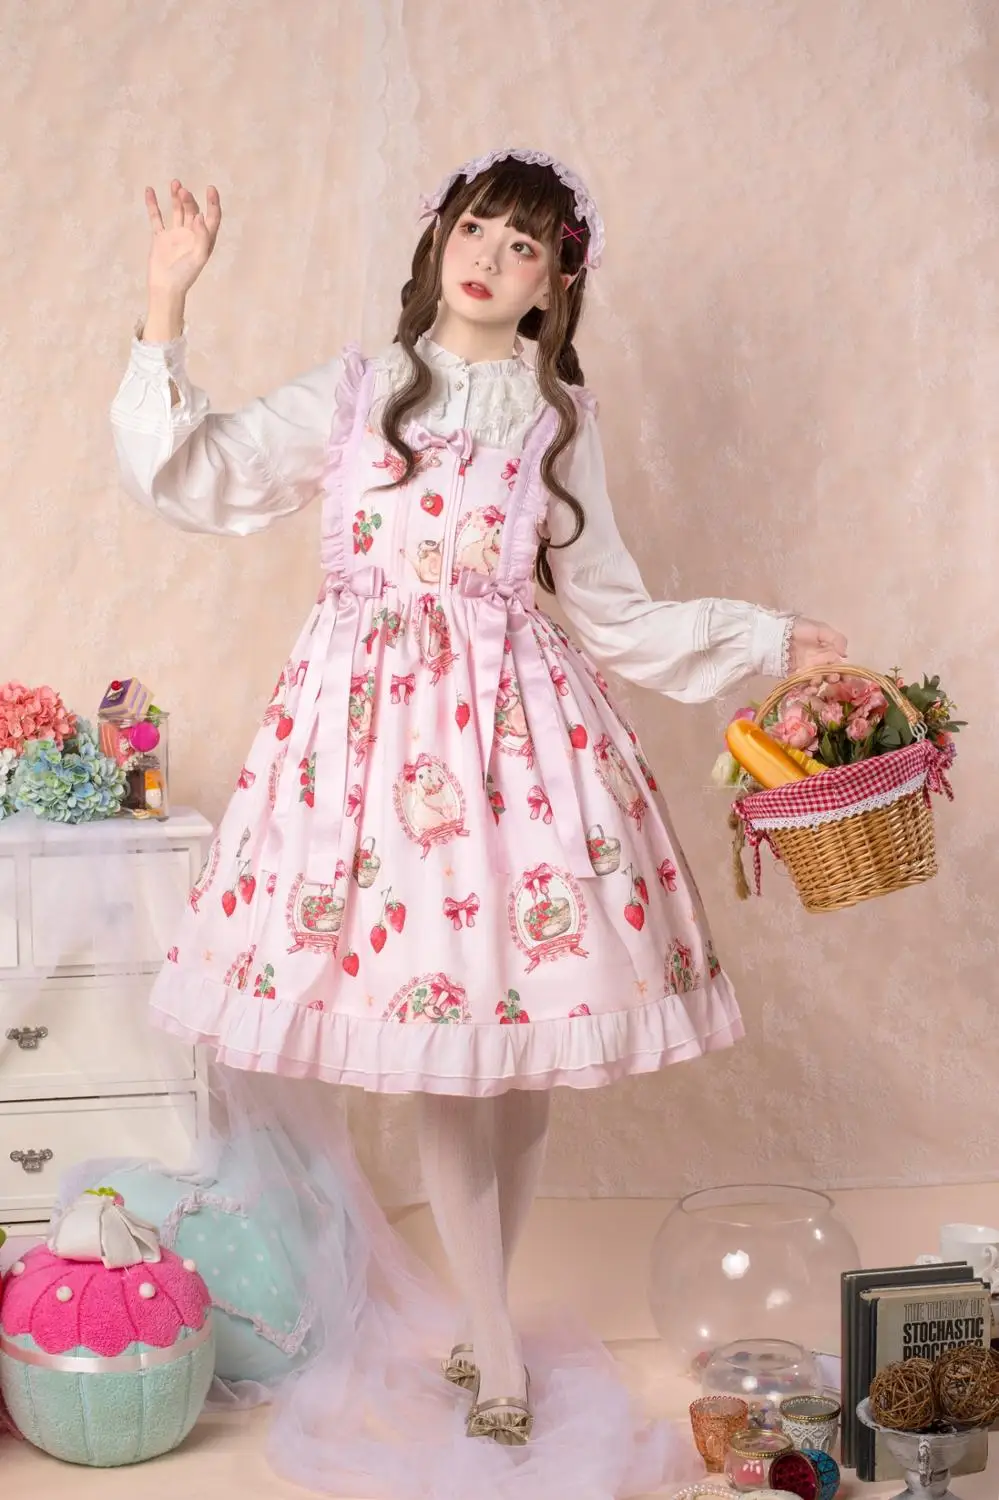 Japanese sweet lolita dress vintage falbala bowknot cute printing high waist victorian dress kawaii girl gotic lolita jsk loli